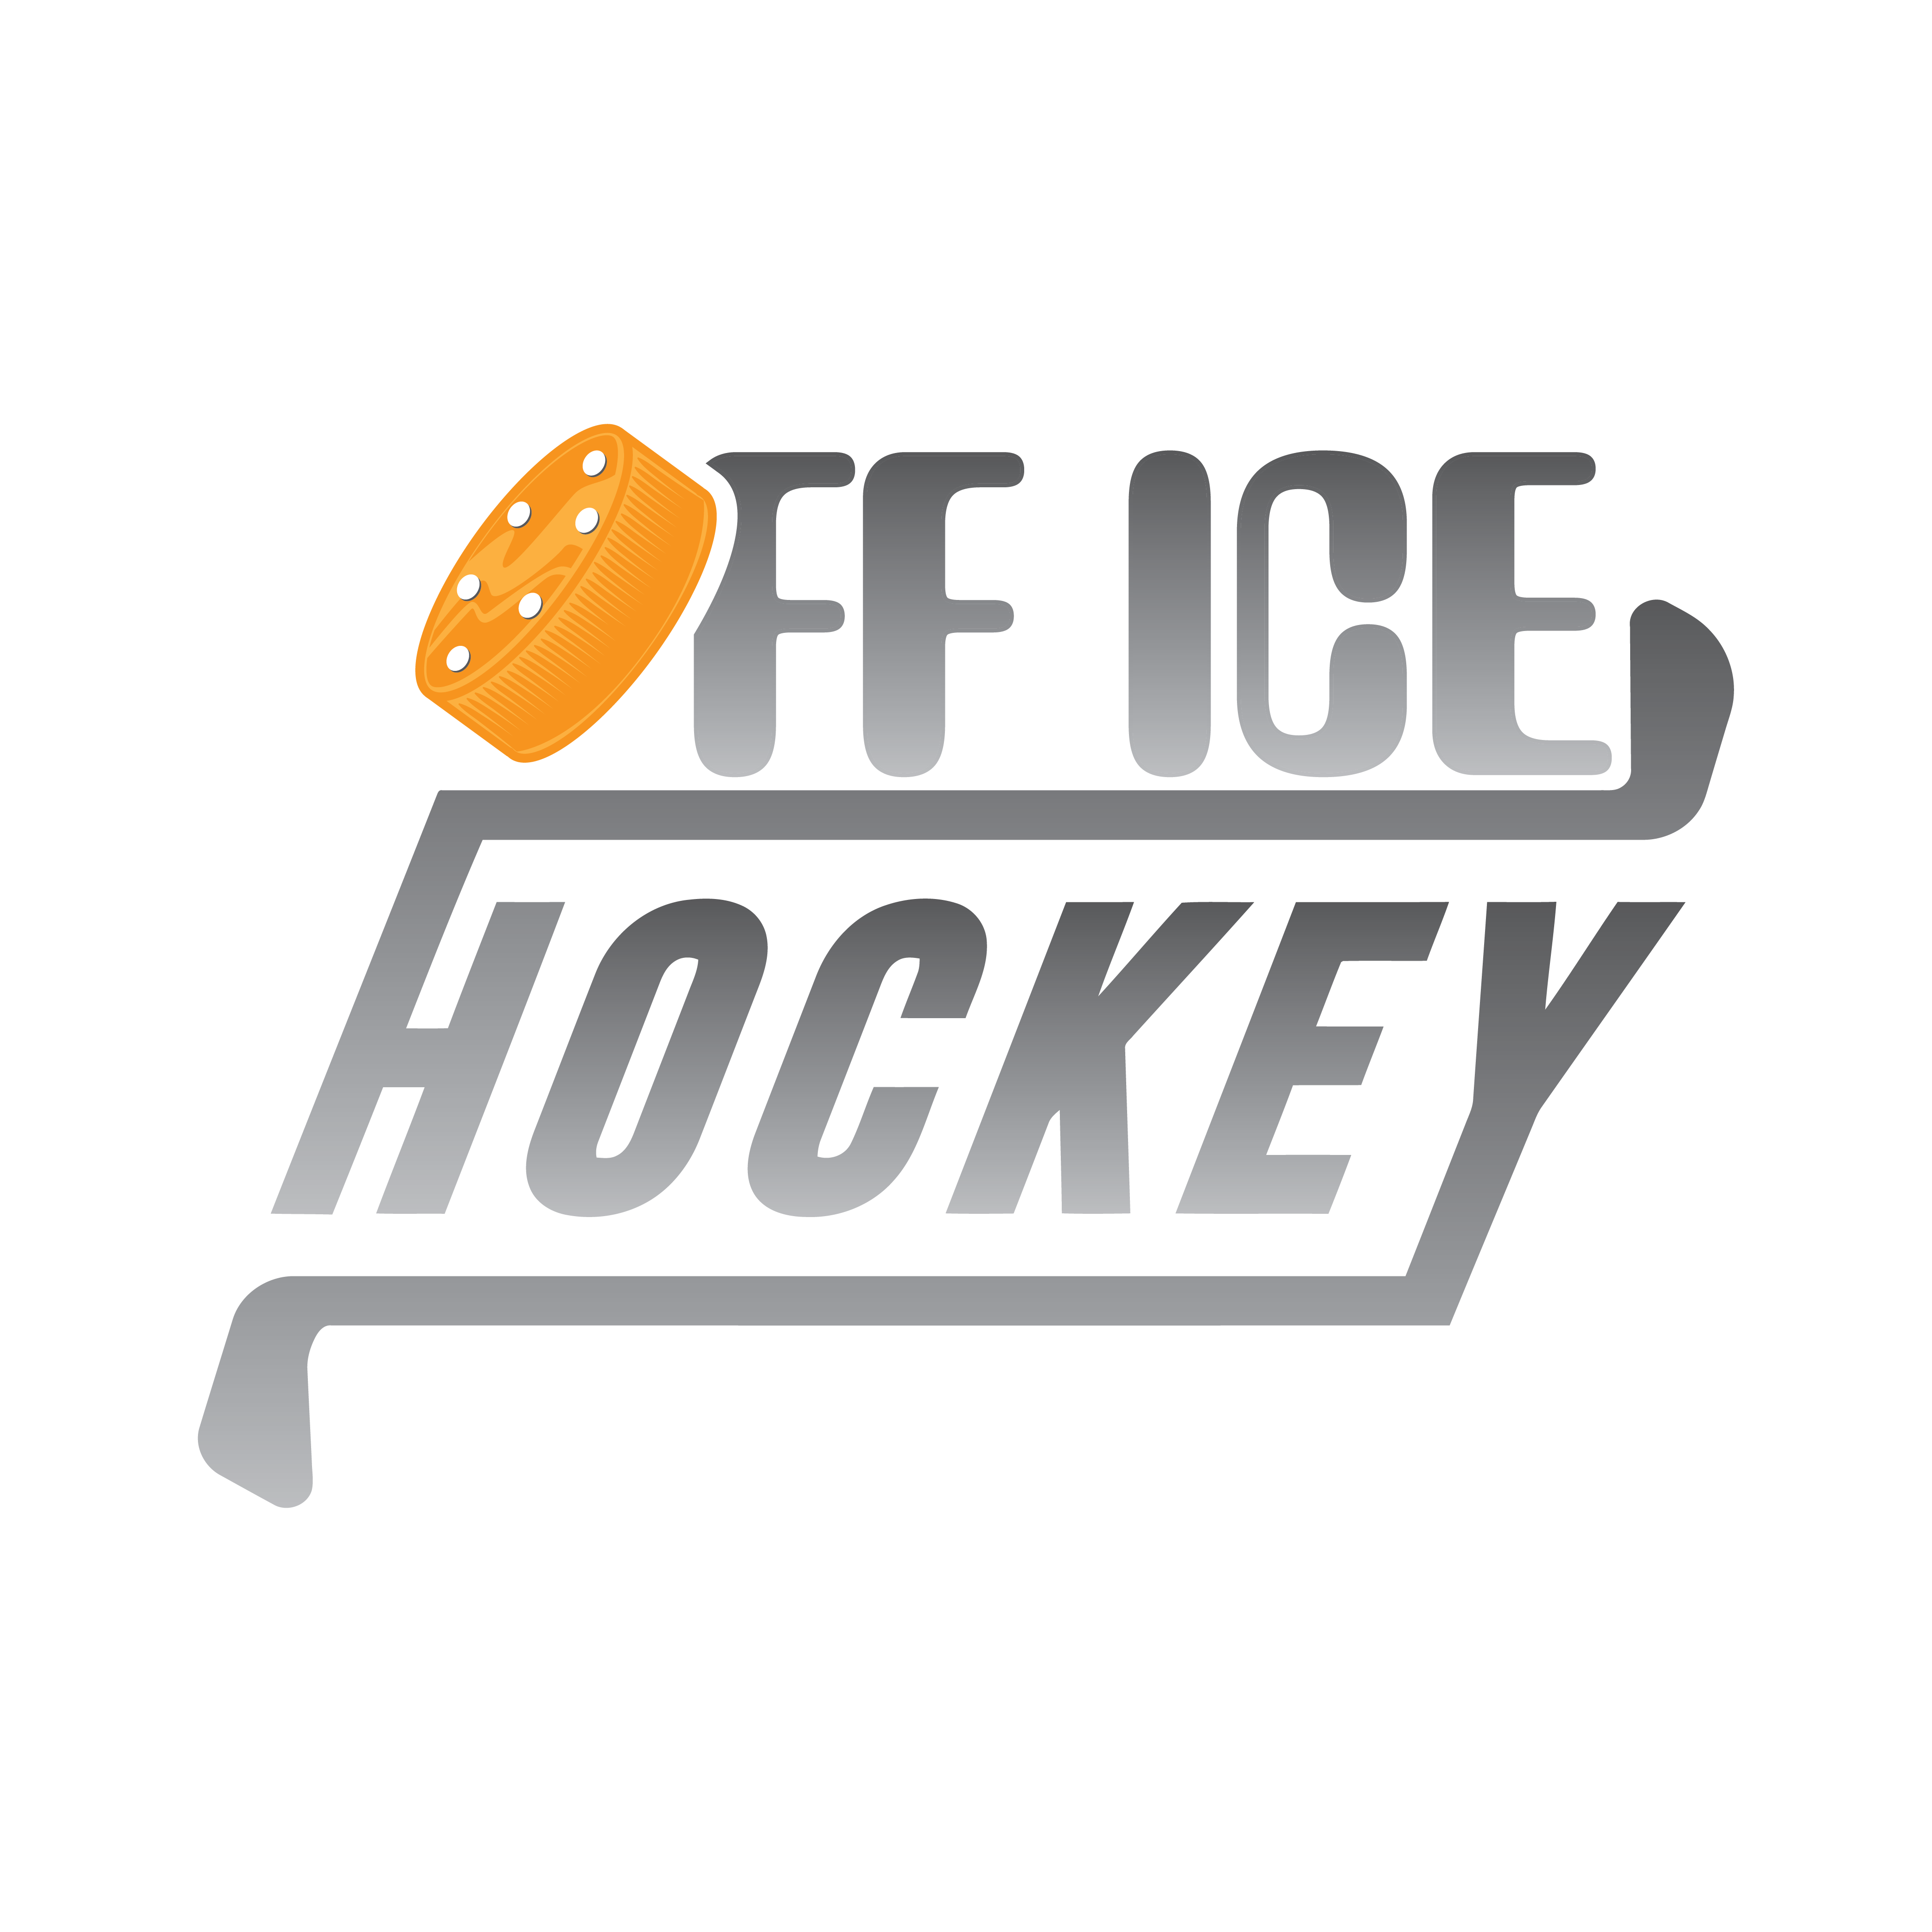 Off Ice Hockey